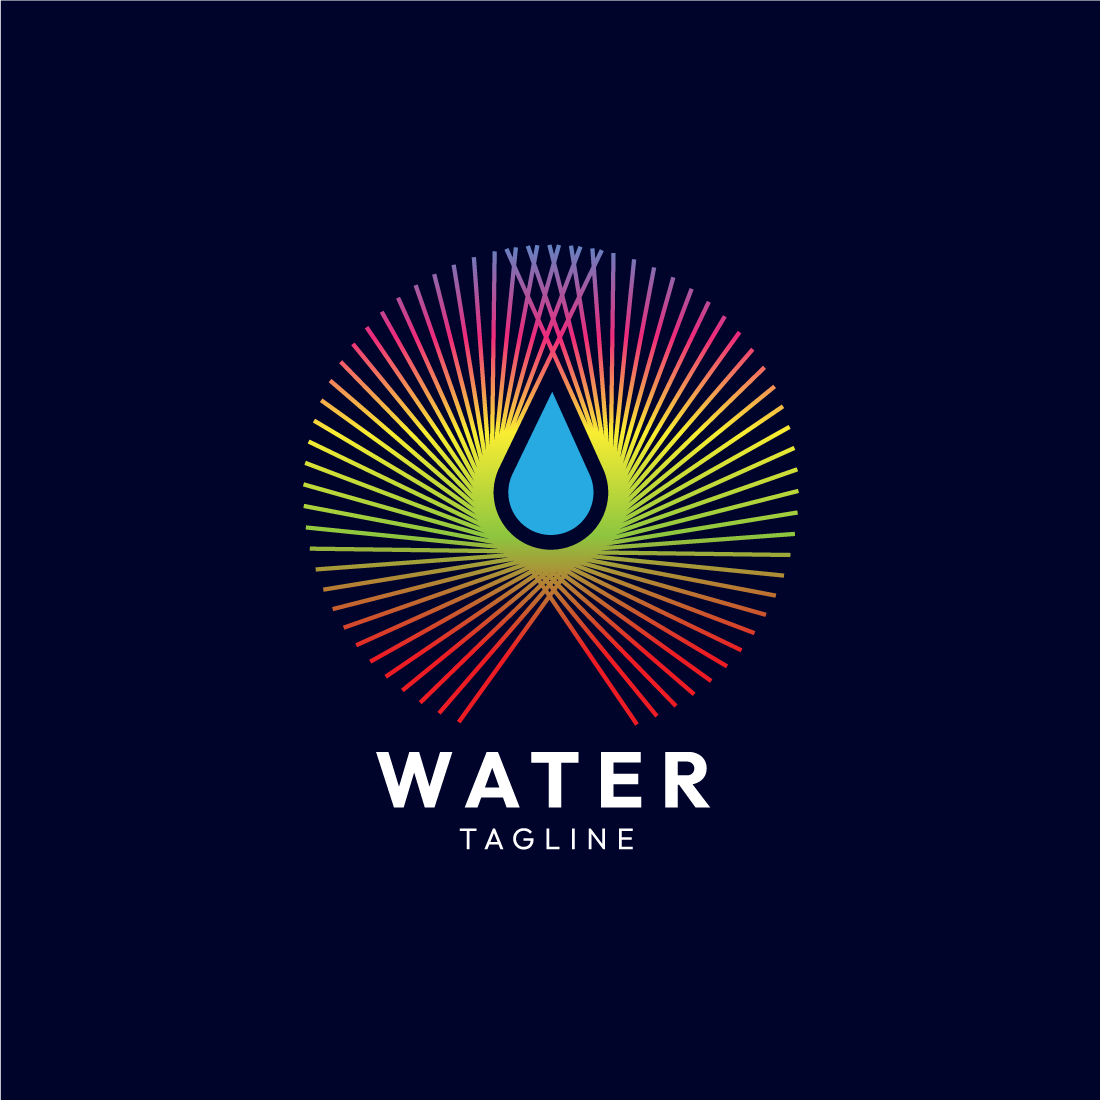 Unique Water Line Art Logo Design - Perfect for Master Bundles preview image.